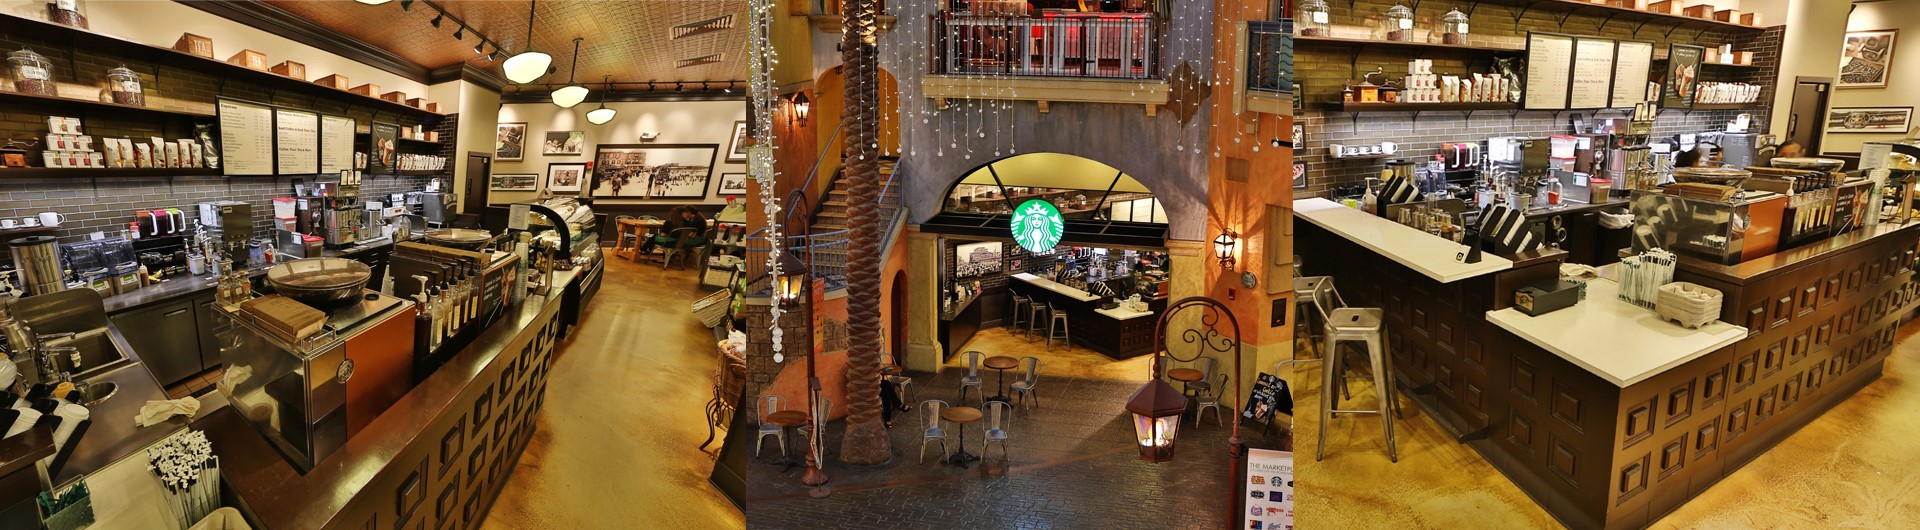 Starbucks coffee in New Jersey